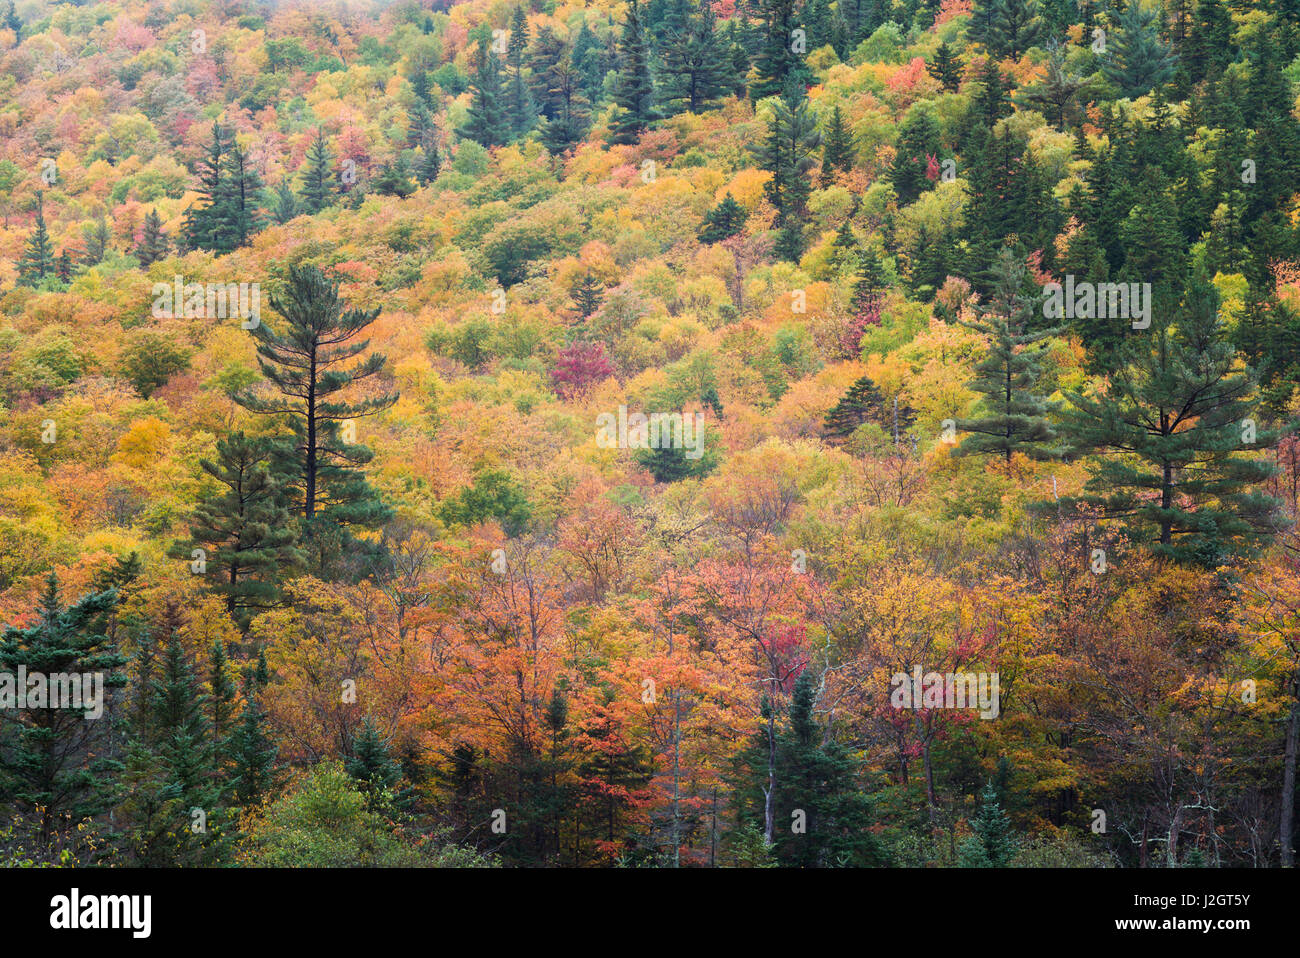 USA, New Hampshire, White Mountains, Crawford Notch, fall foliage by Mount Washington Stock Photo